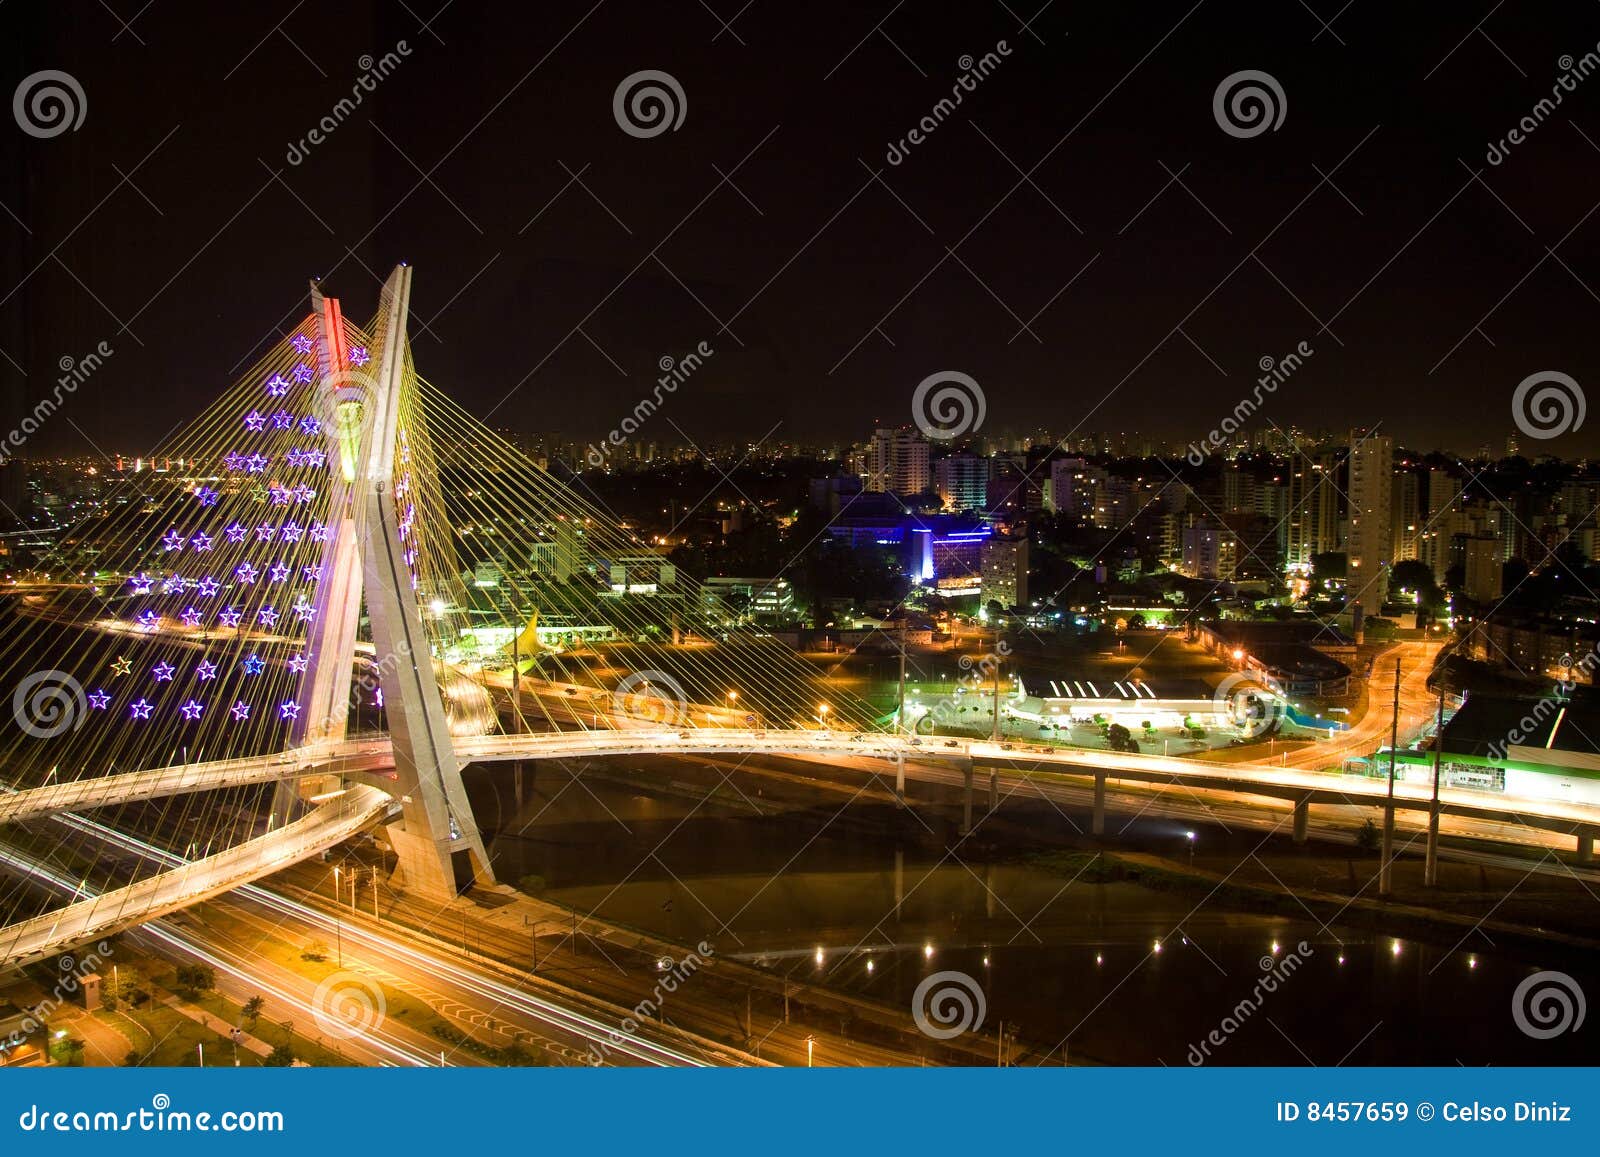 pinheiros river bridge at night